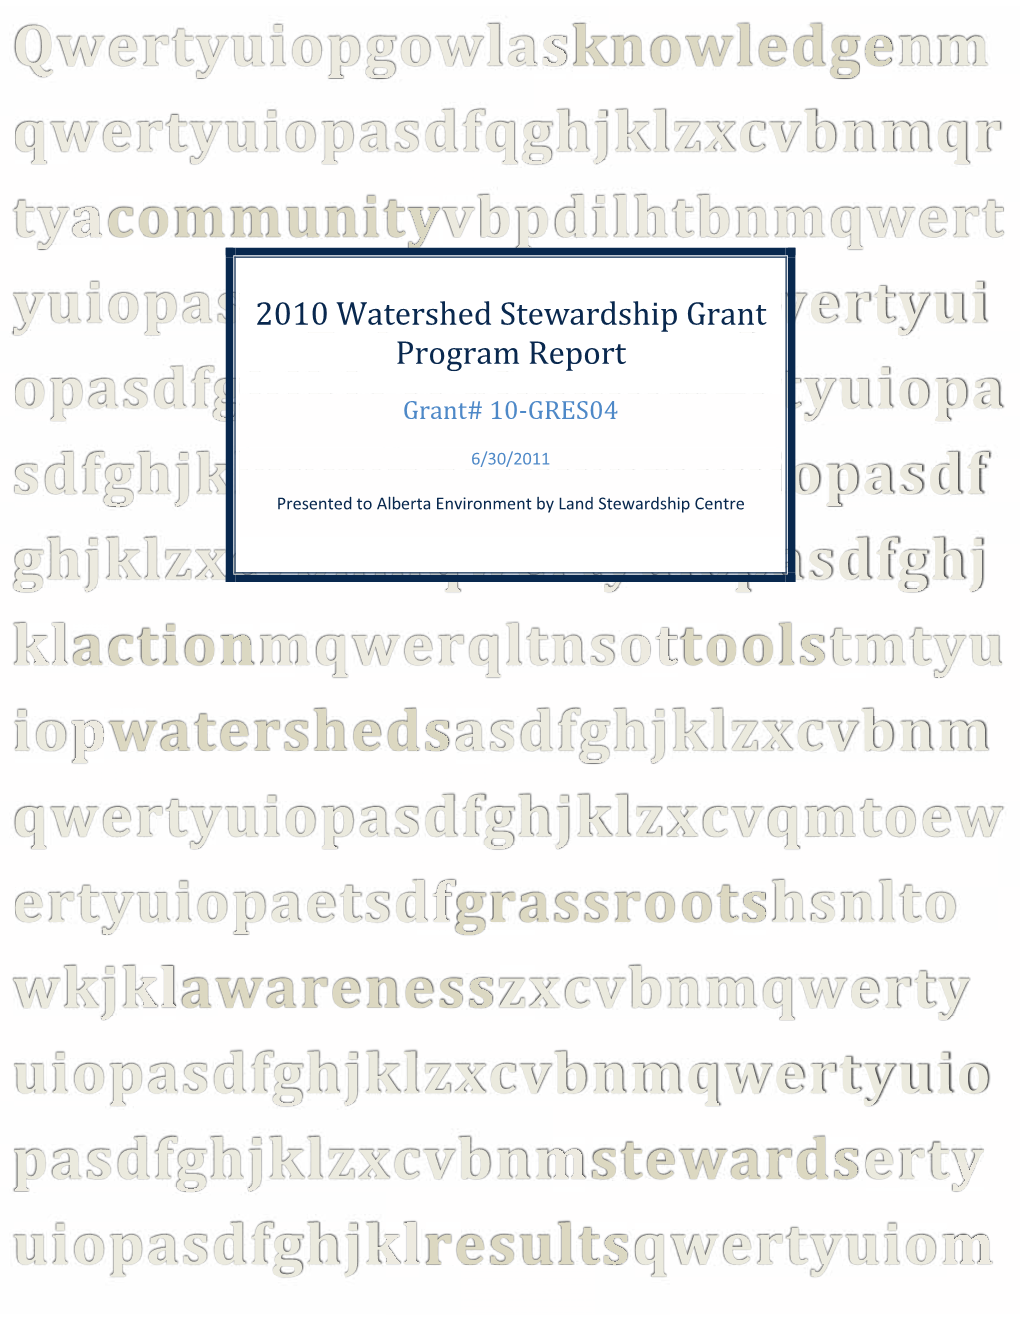 2010 Watershed Stewardship Grant Program Report Opasdfghjklzxcvbnmqwertyuiopagrant# 10-GRES04